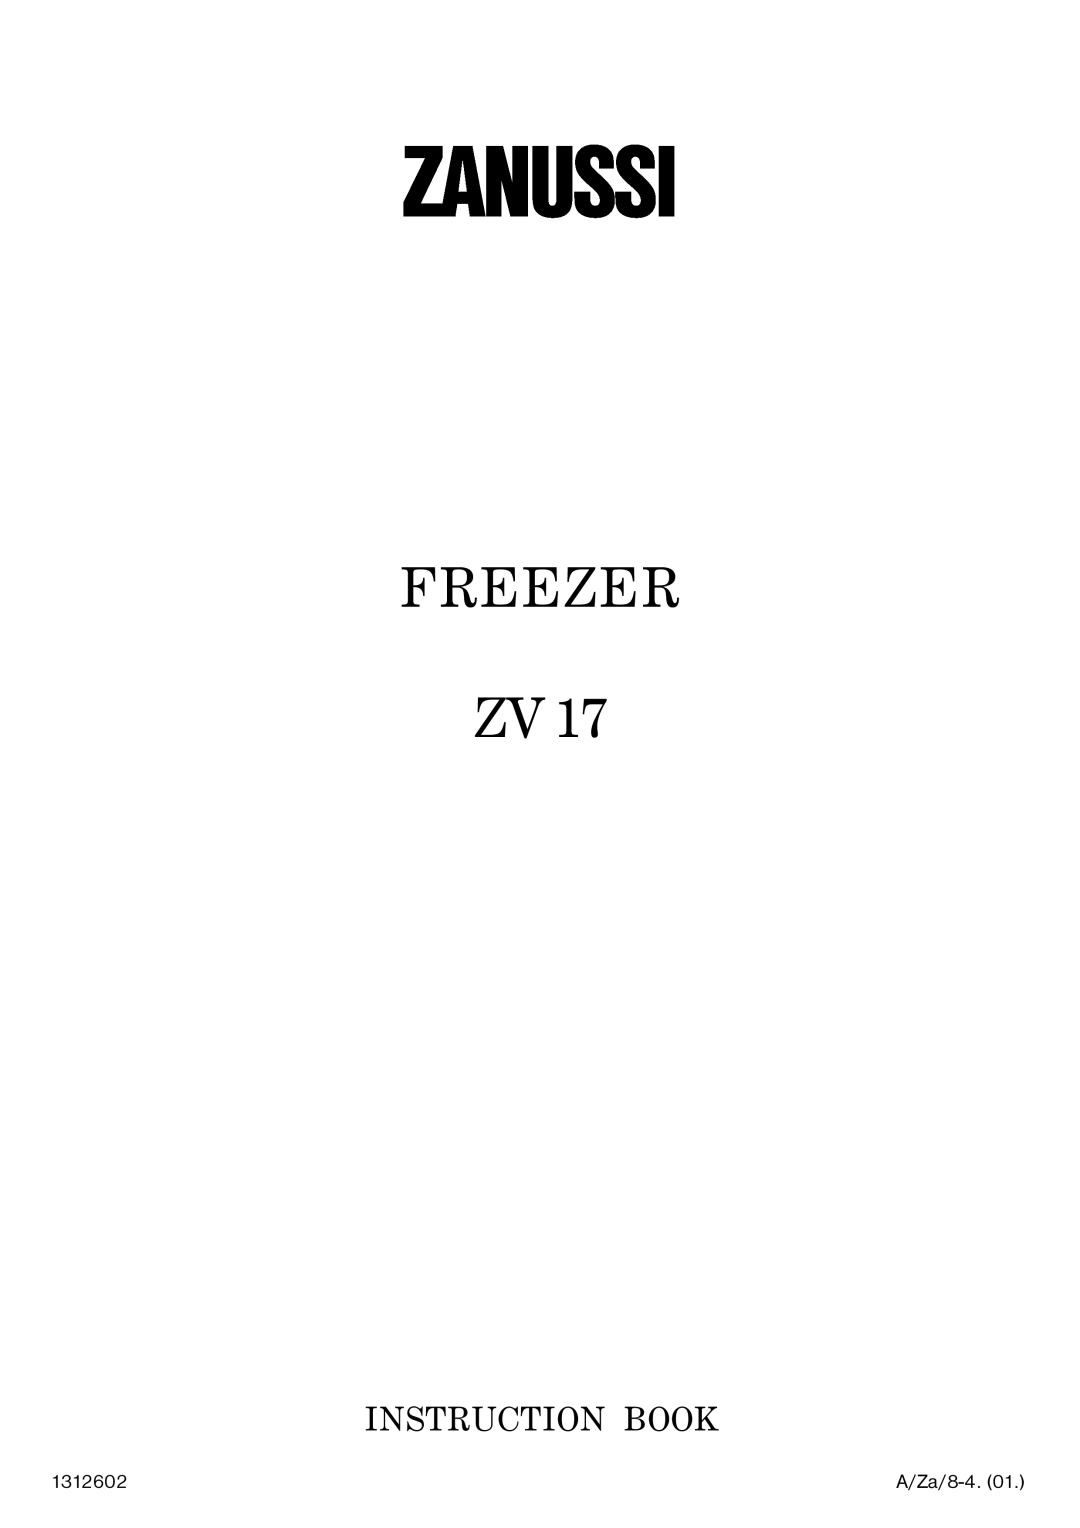 Zanussi ZV 17 manual Zanussi, Freezer Zv, Instruction Book 